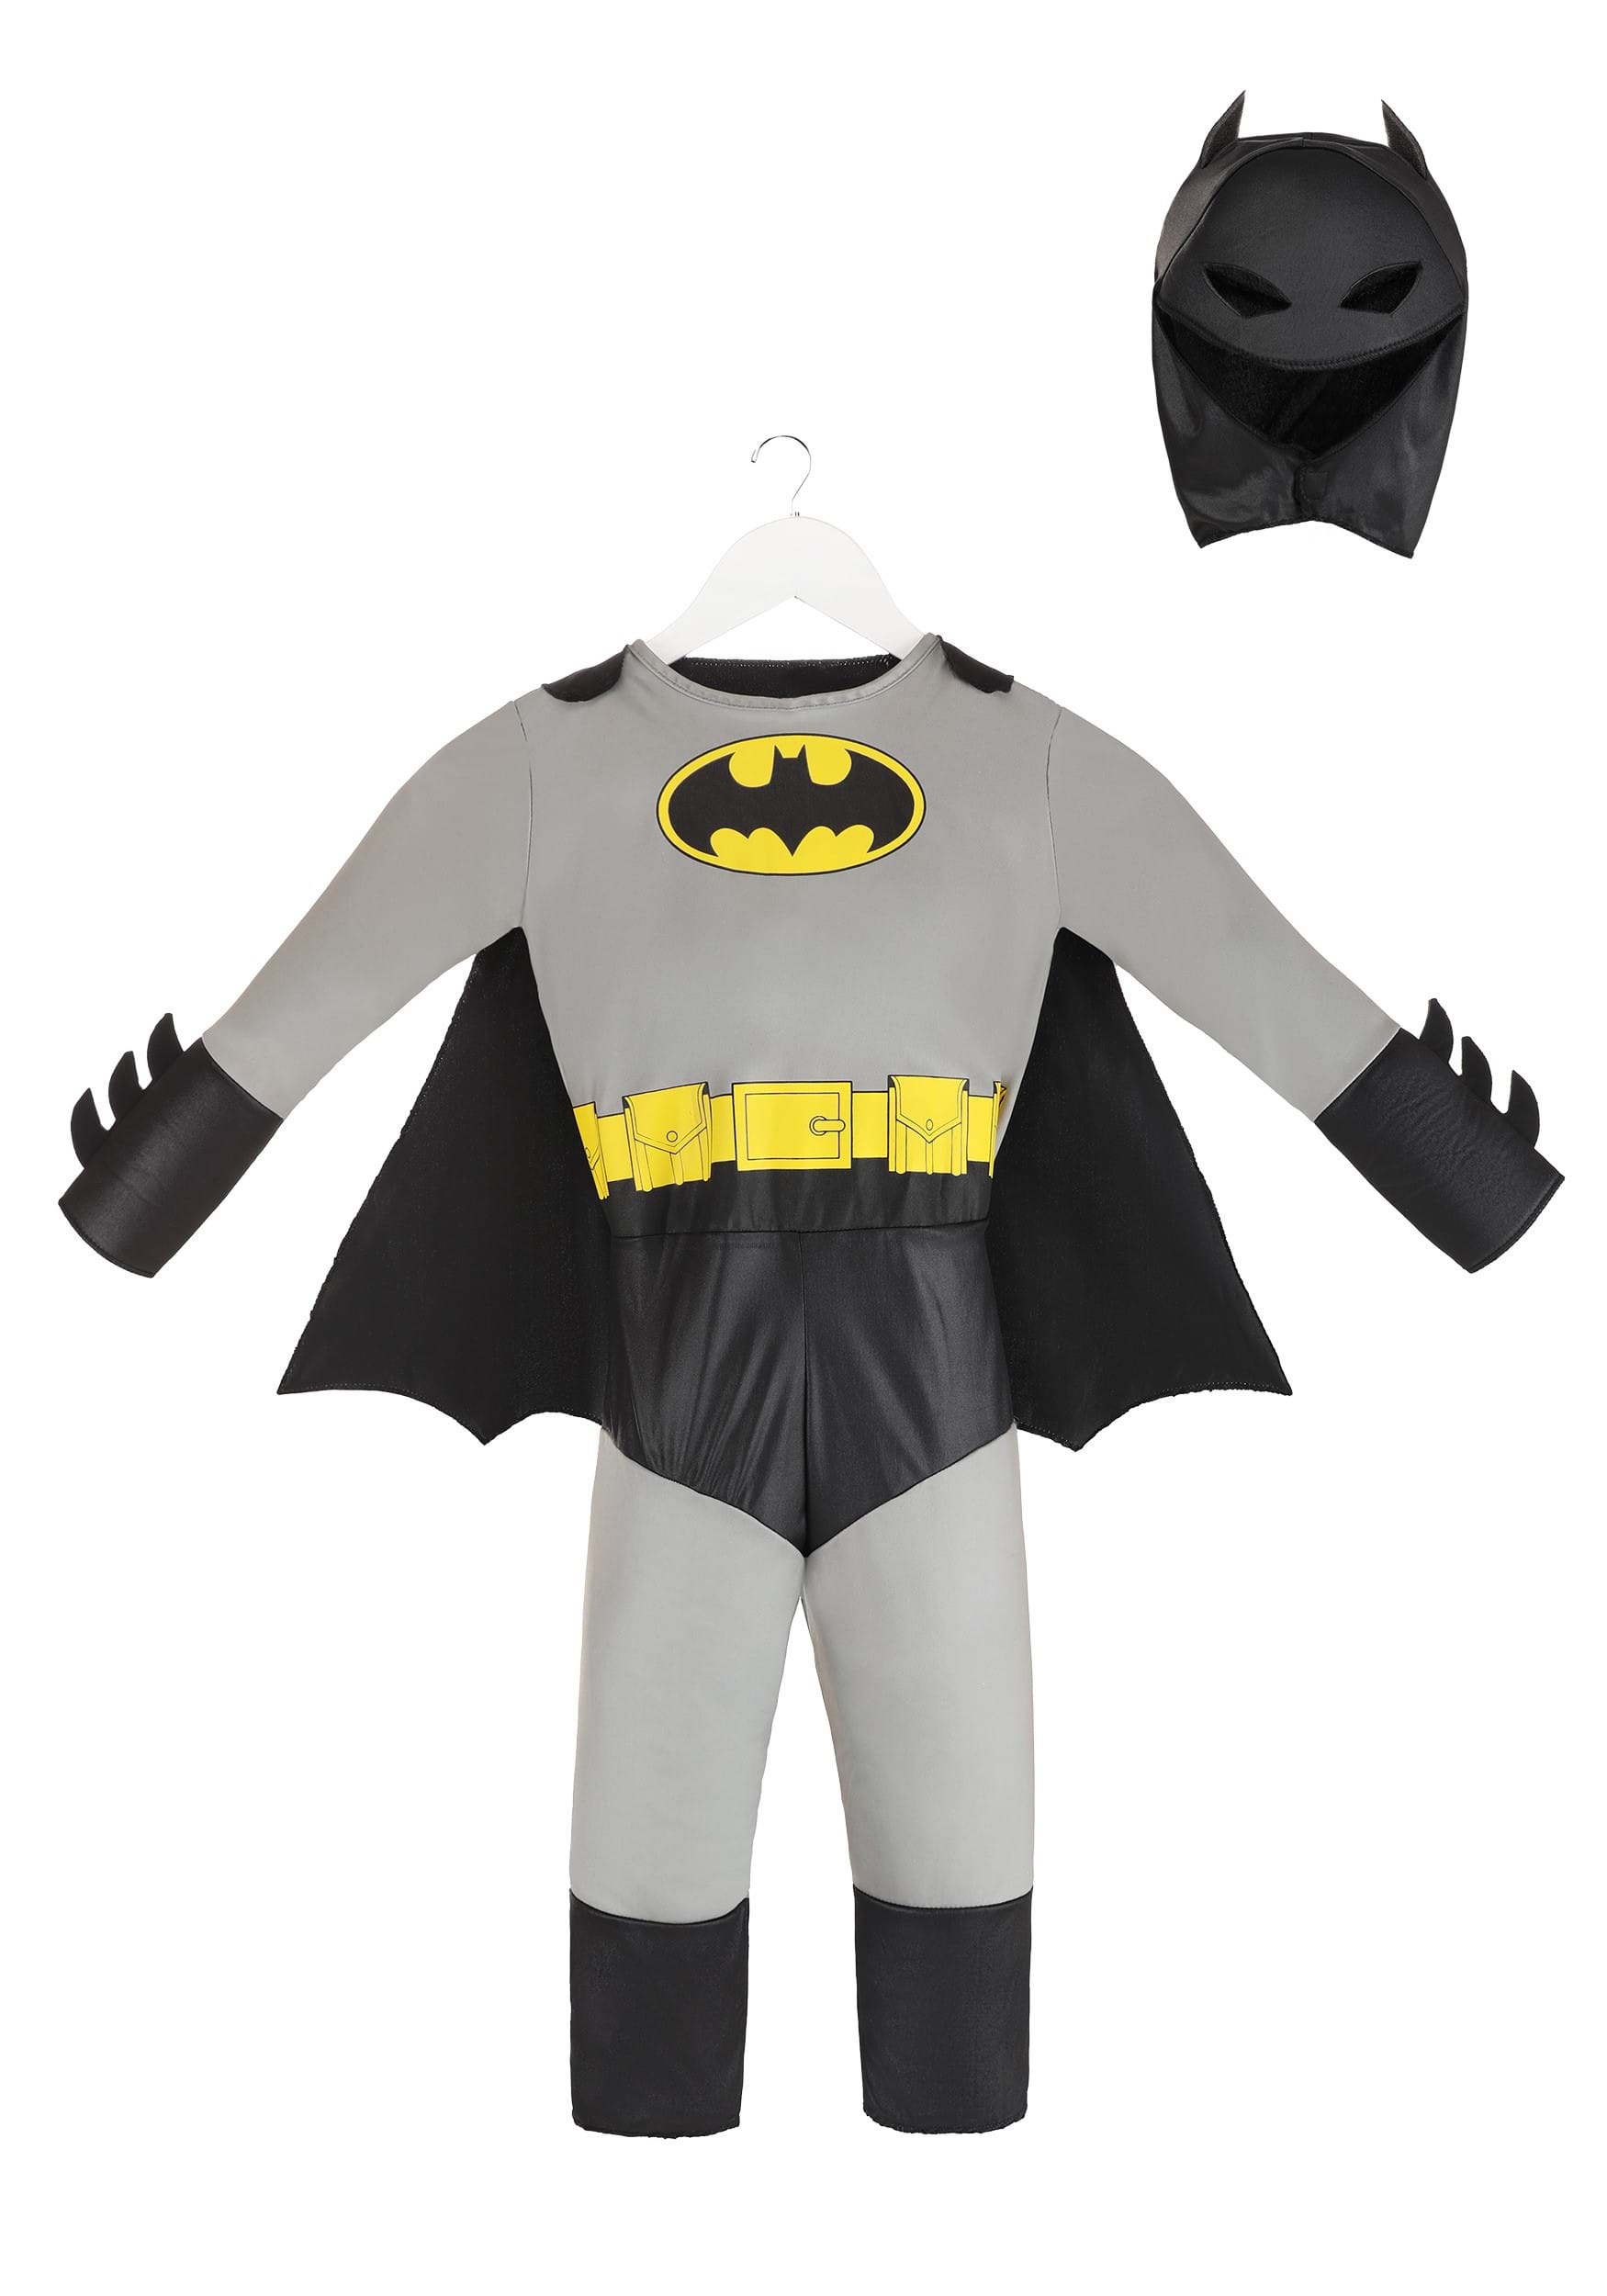 Avengers Inflatable Batman Costumes Kids or Men –